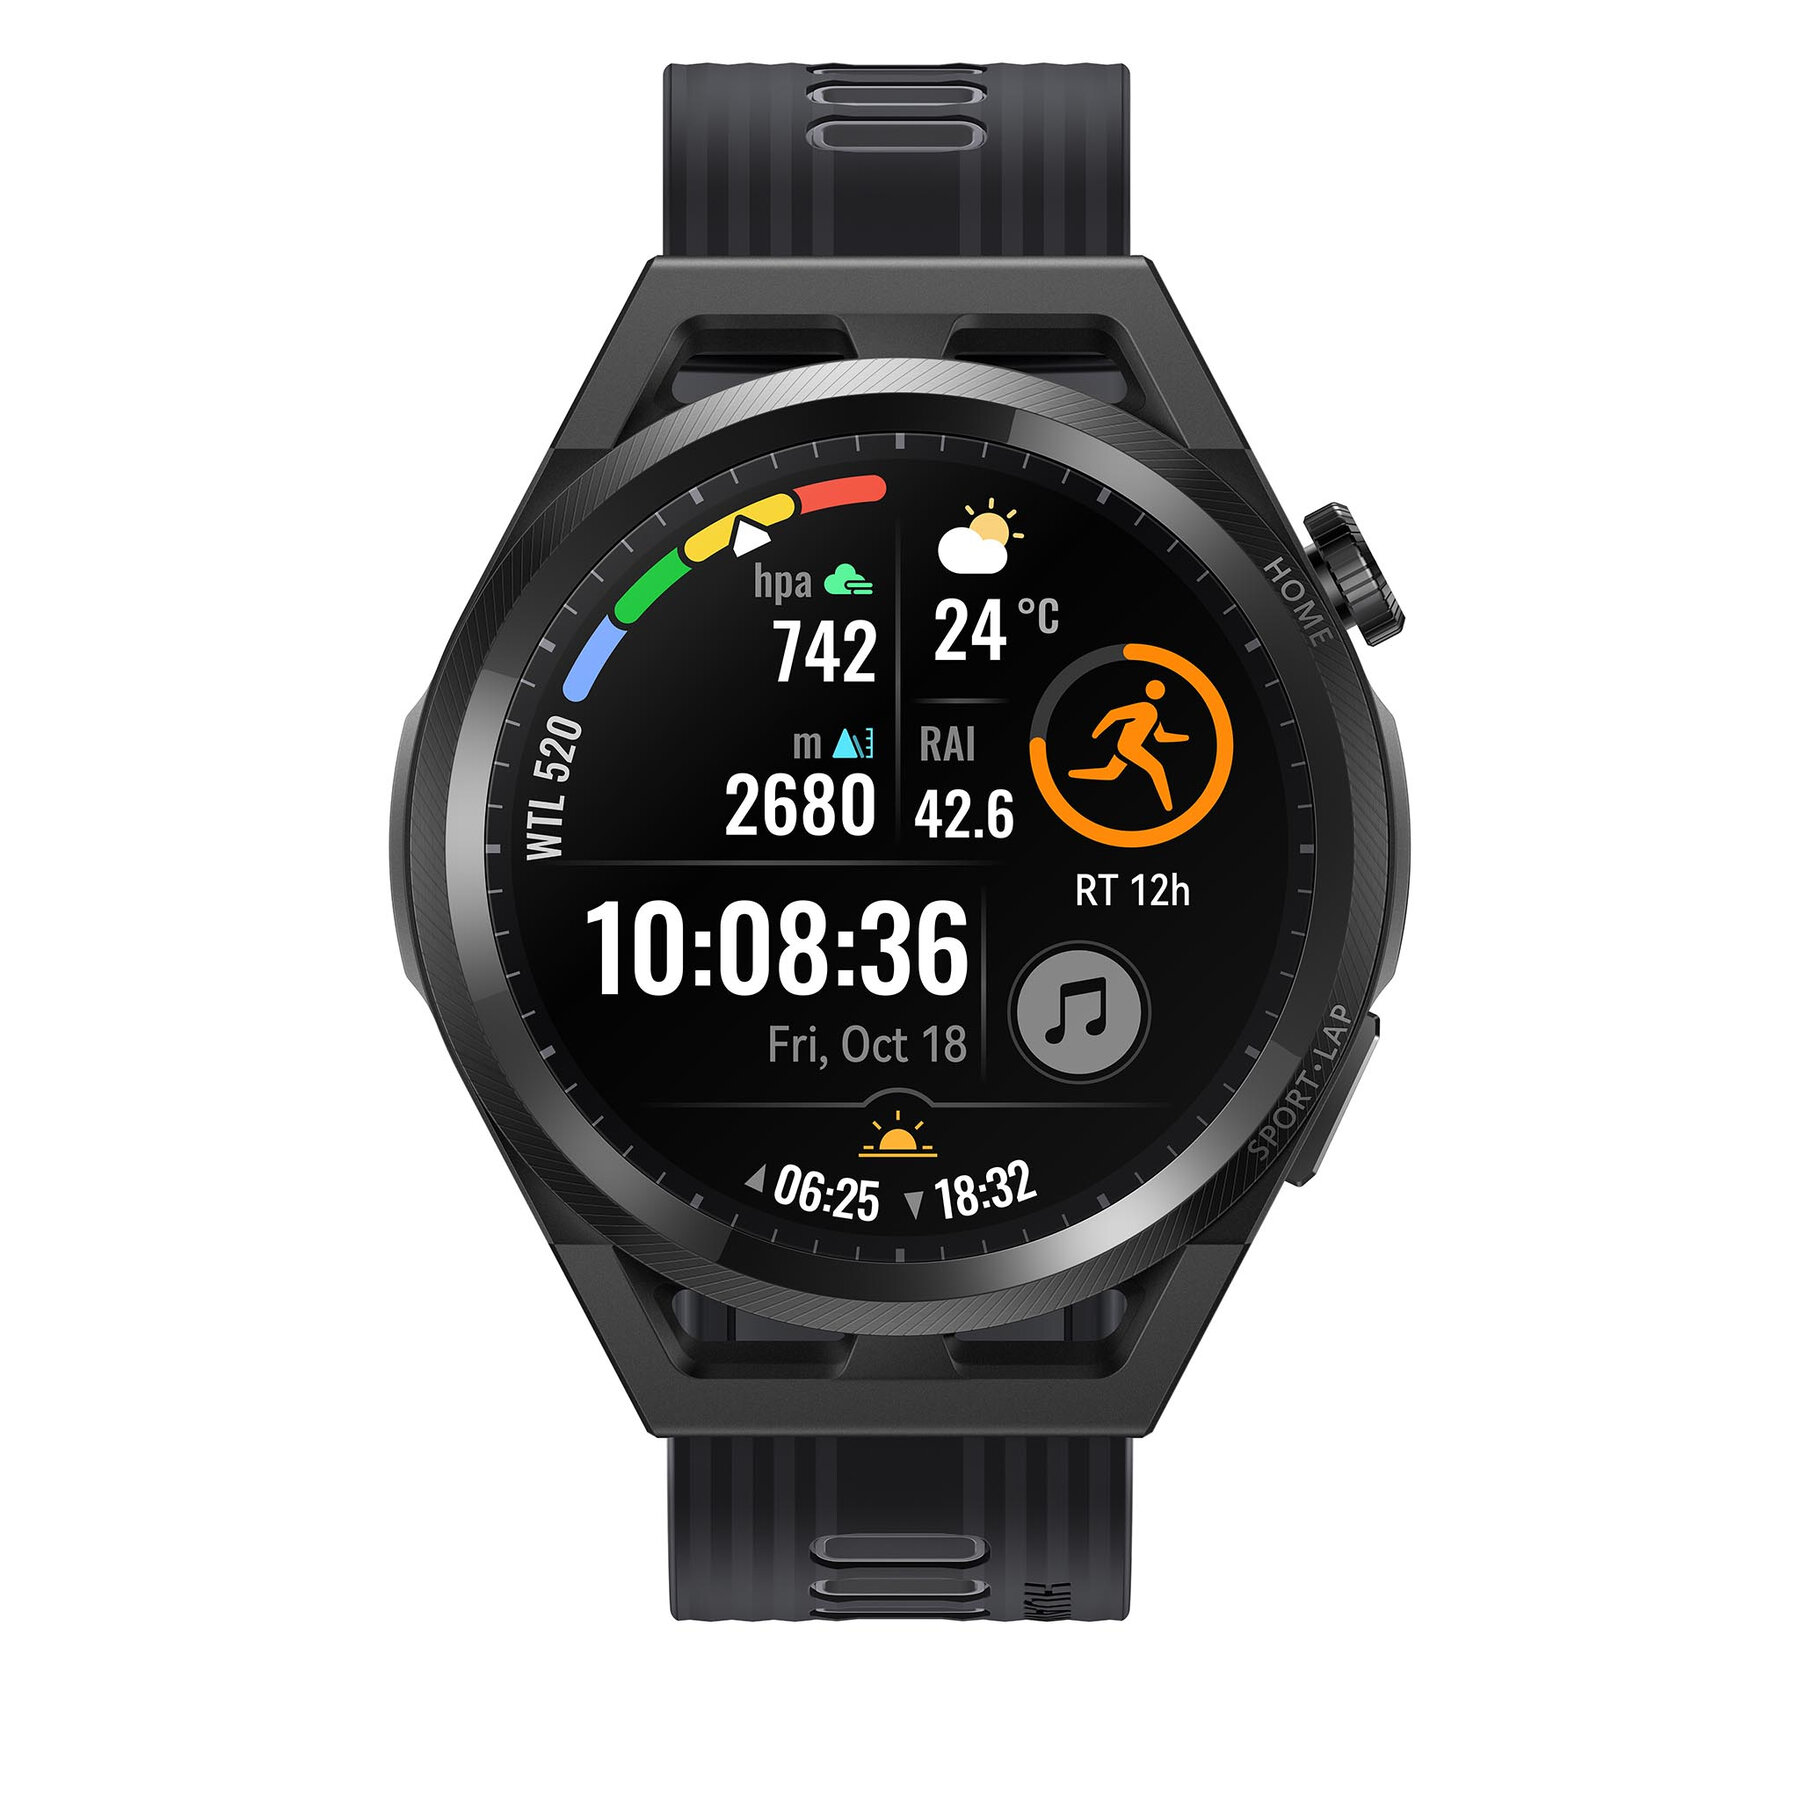 Smartwatch Huawei Watch Gt Runner RUN-B19 Black/Black